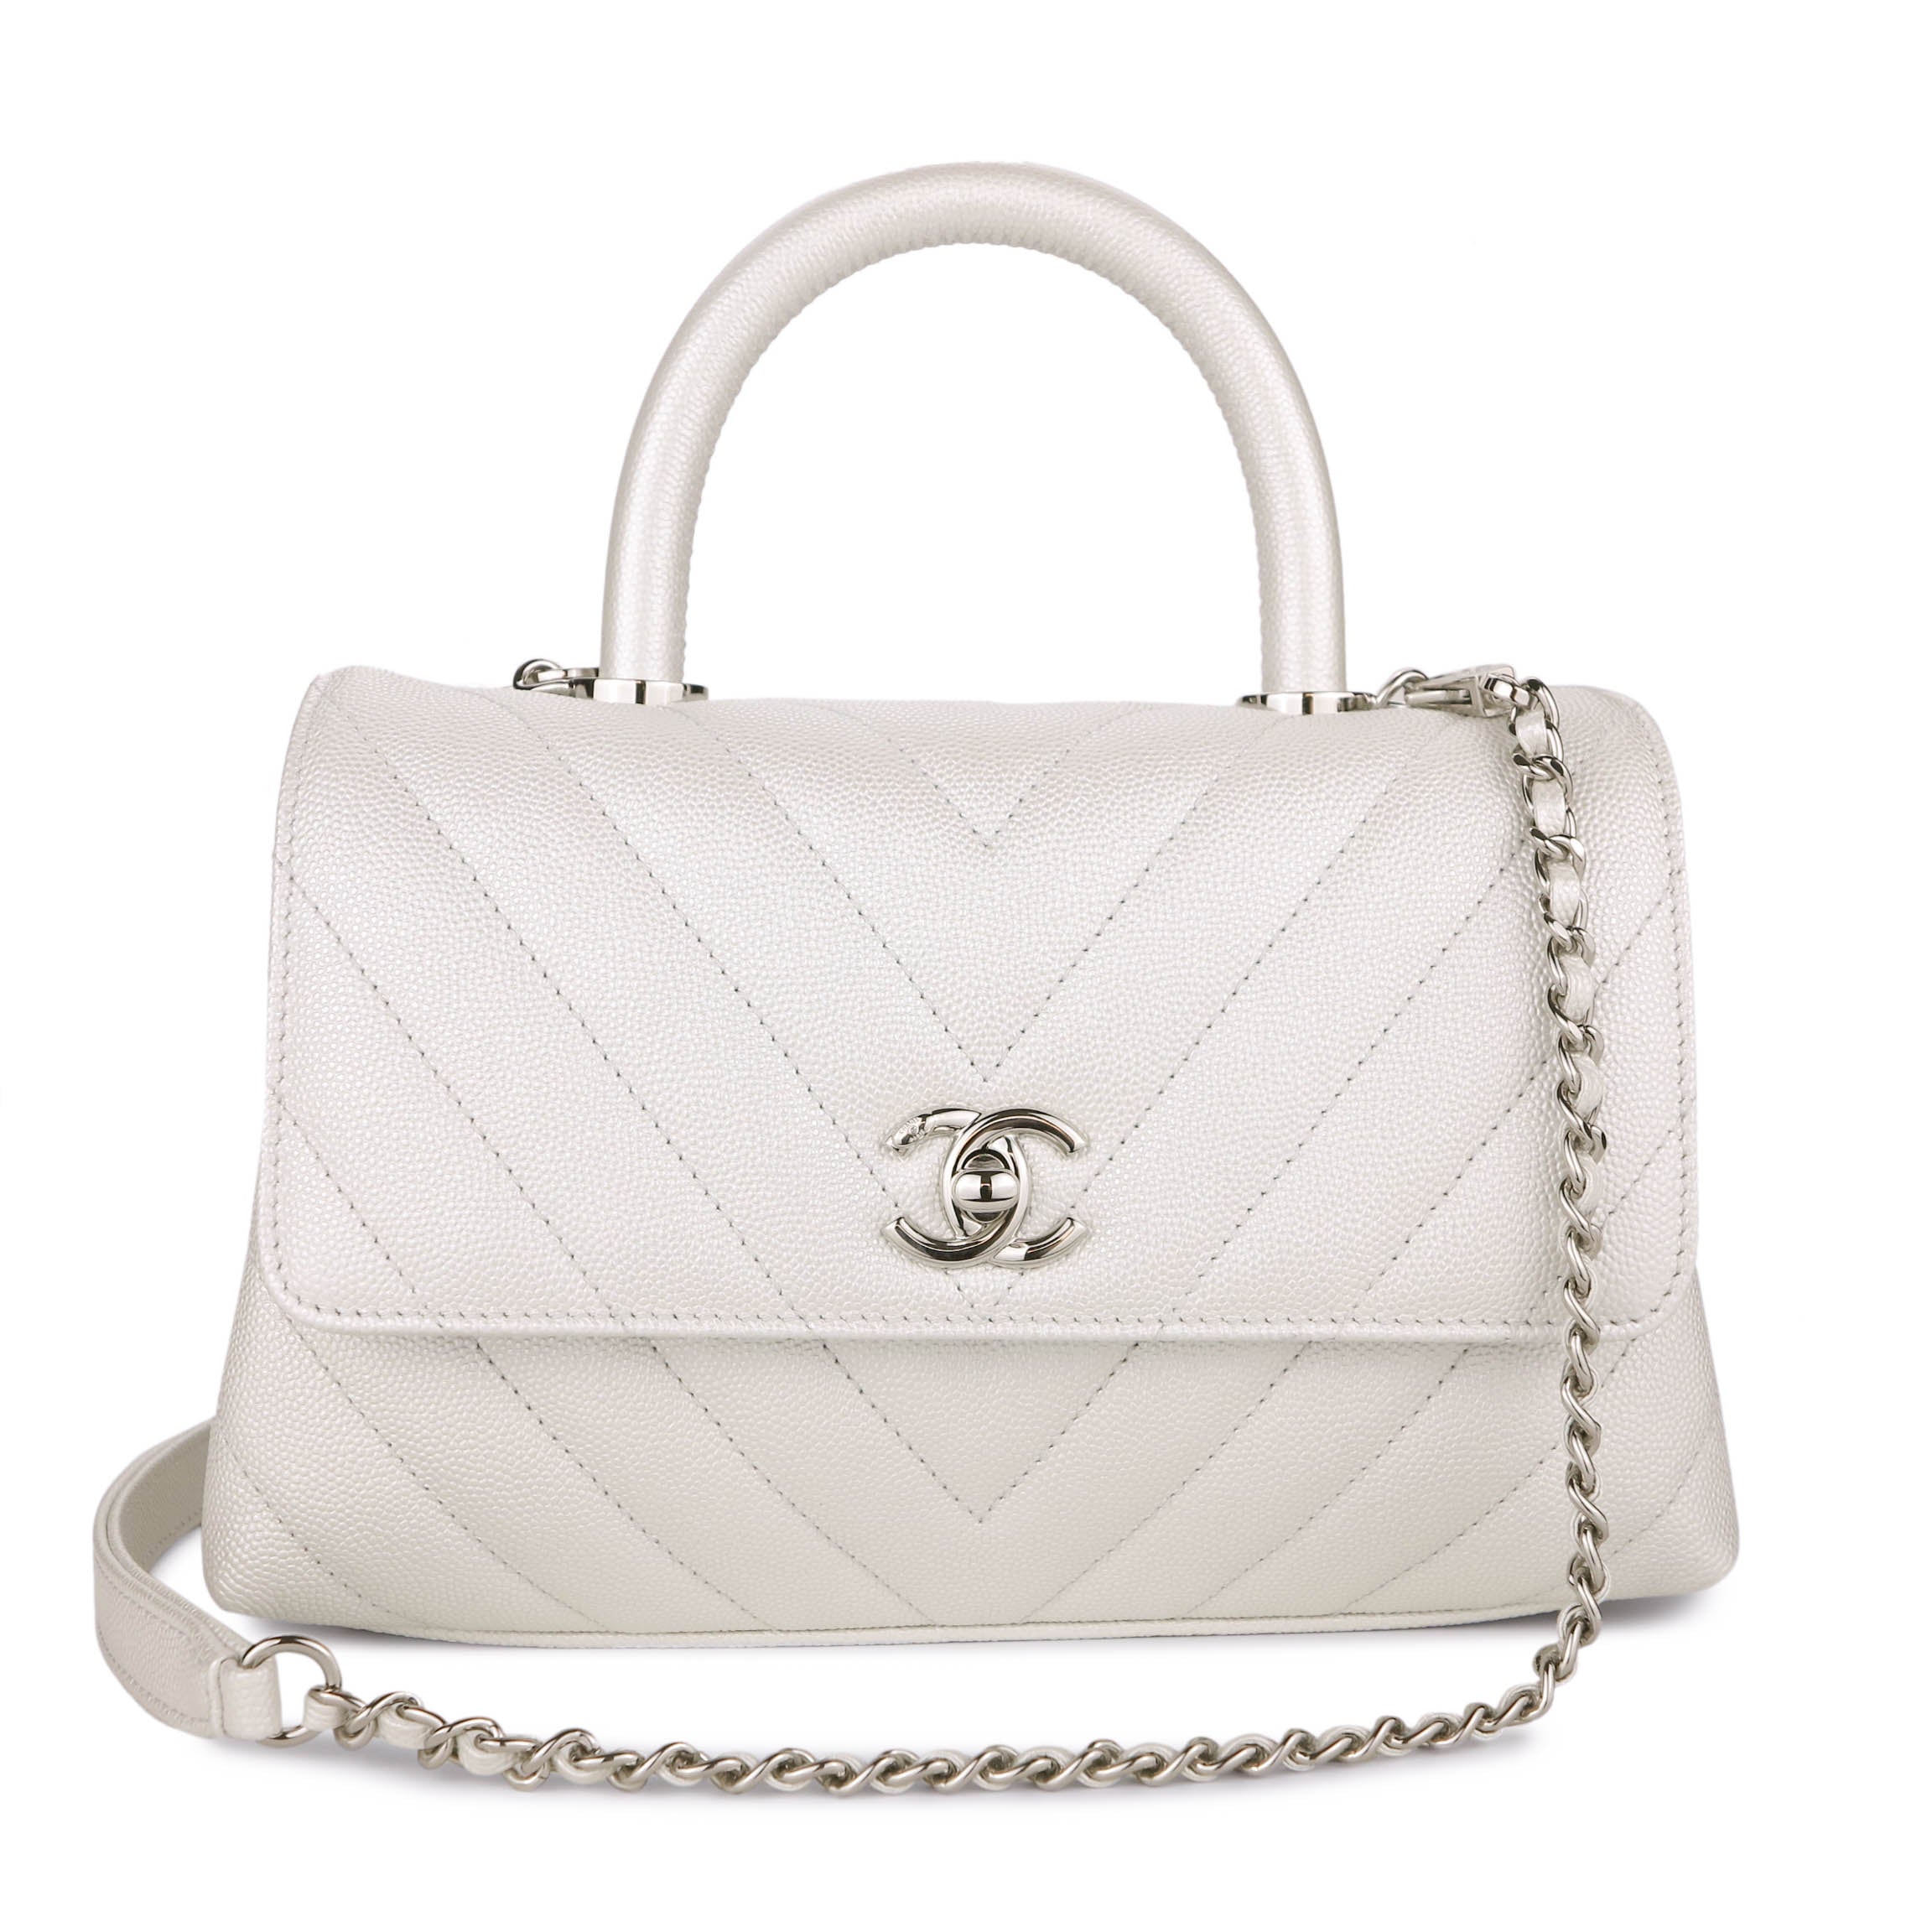 Chanel Coco Handle  Chanel coco handle, White chanel bag, Chanel handbag  white